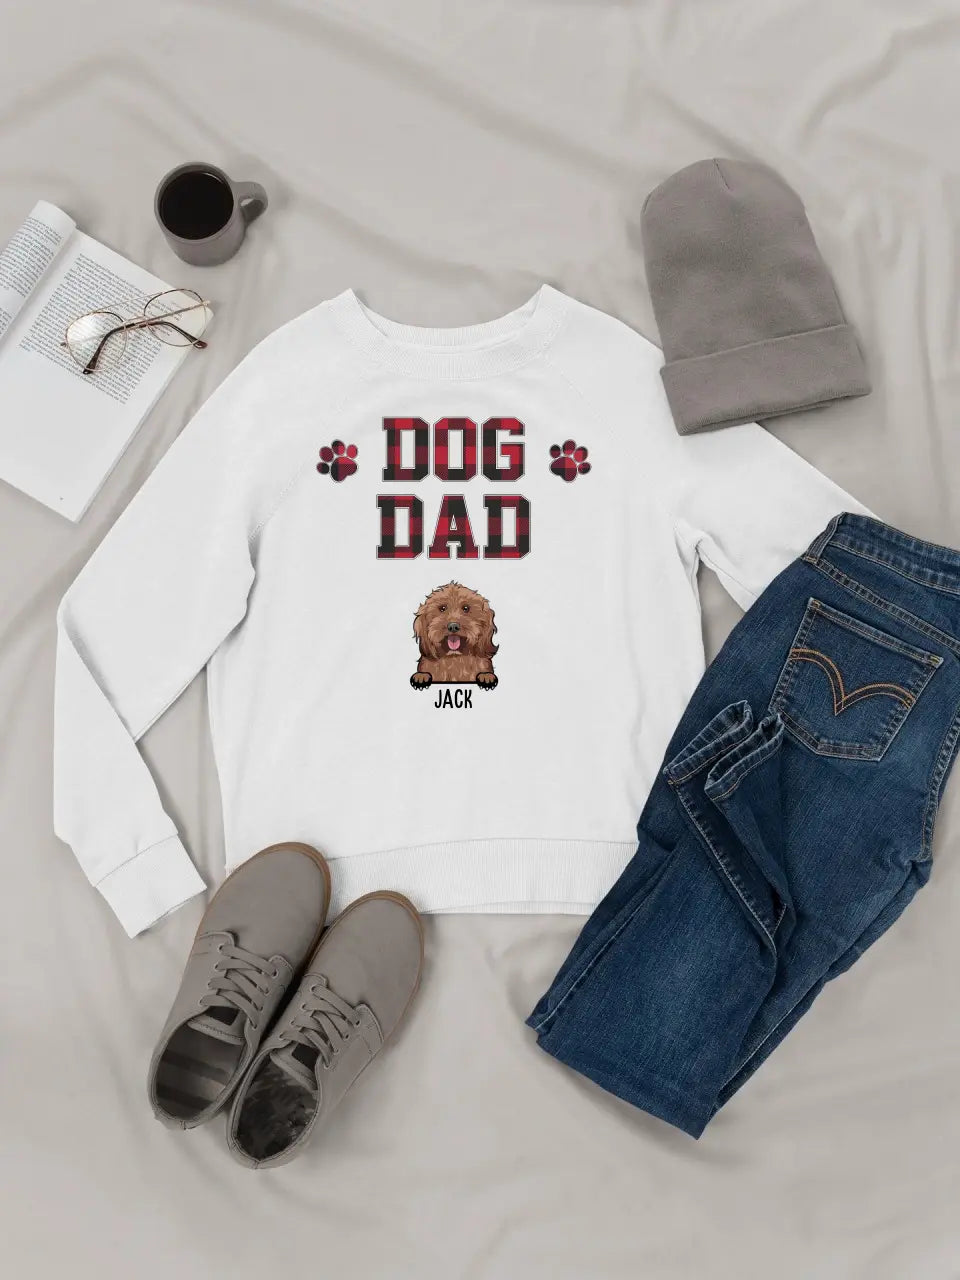 Dog Dad